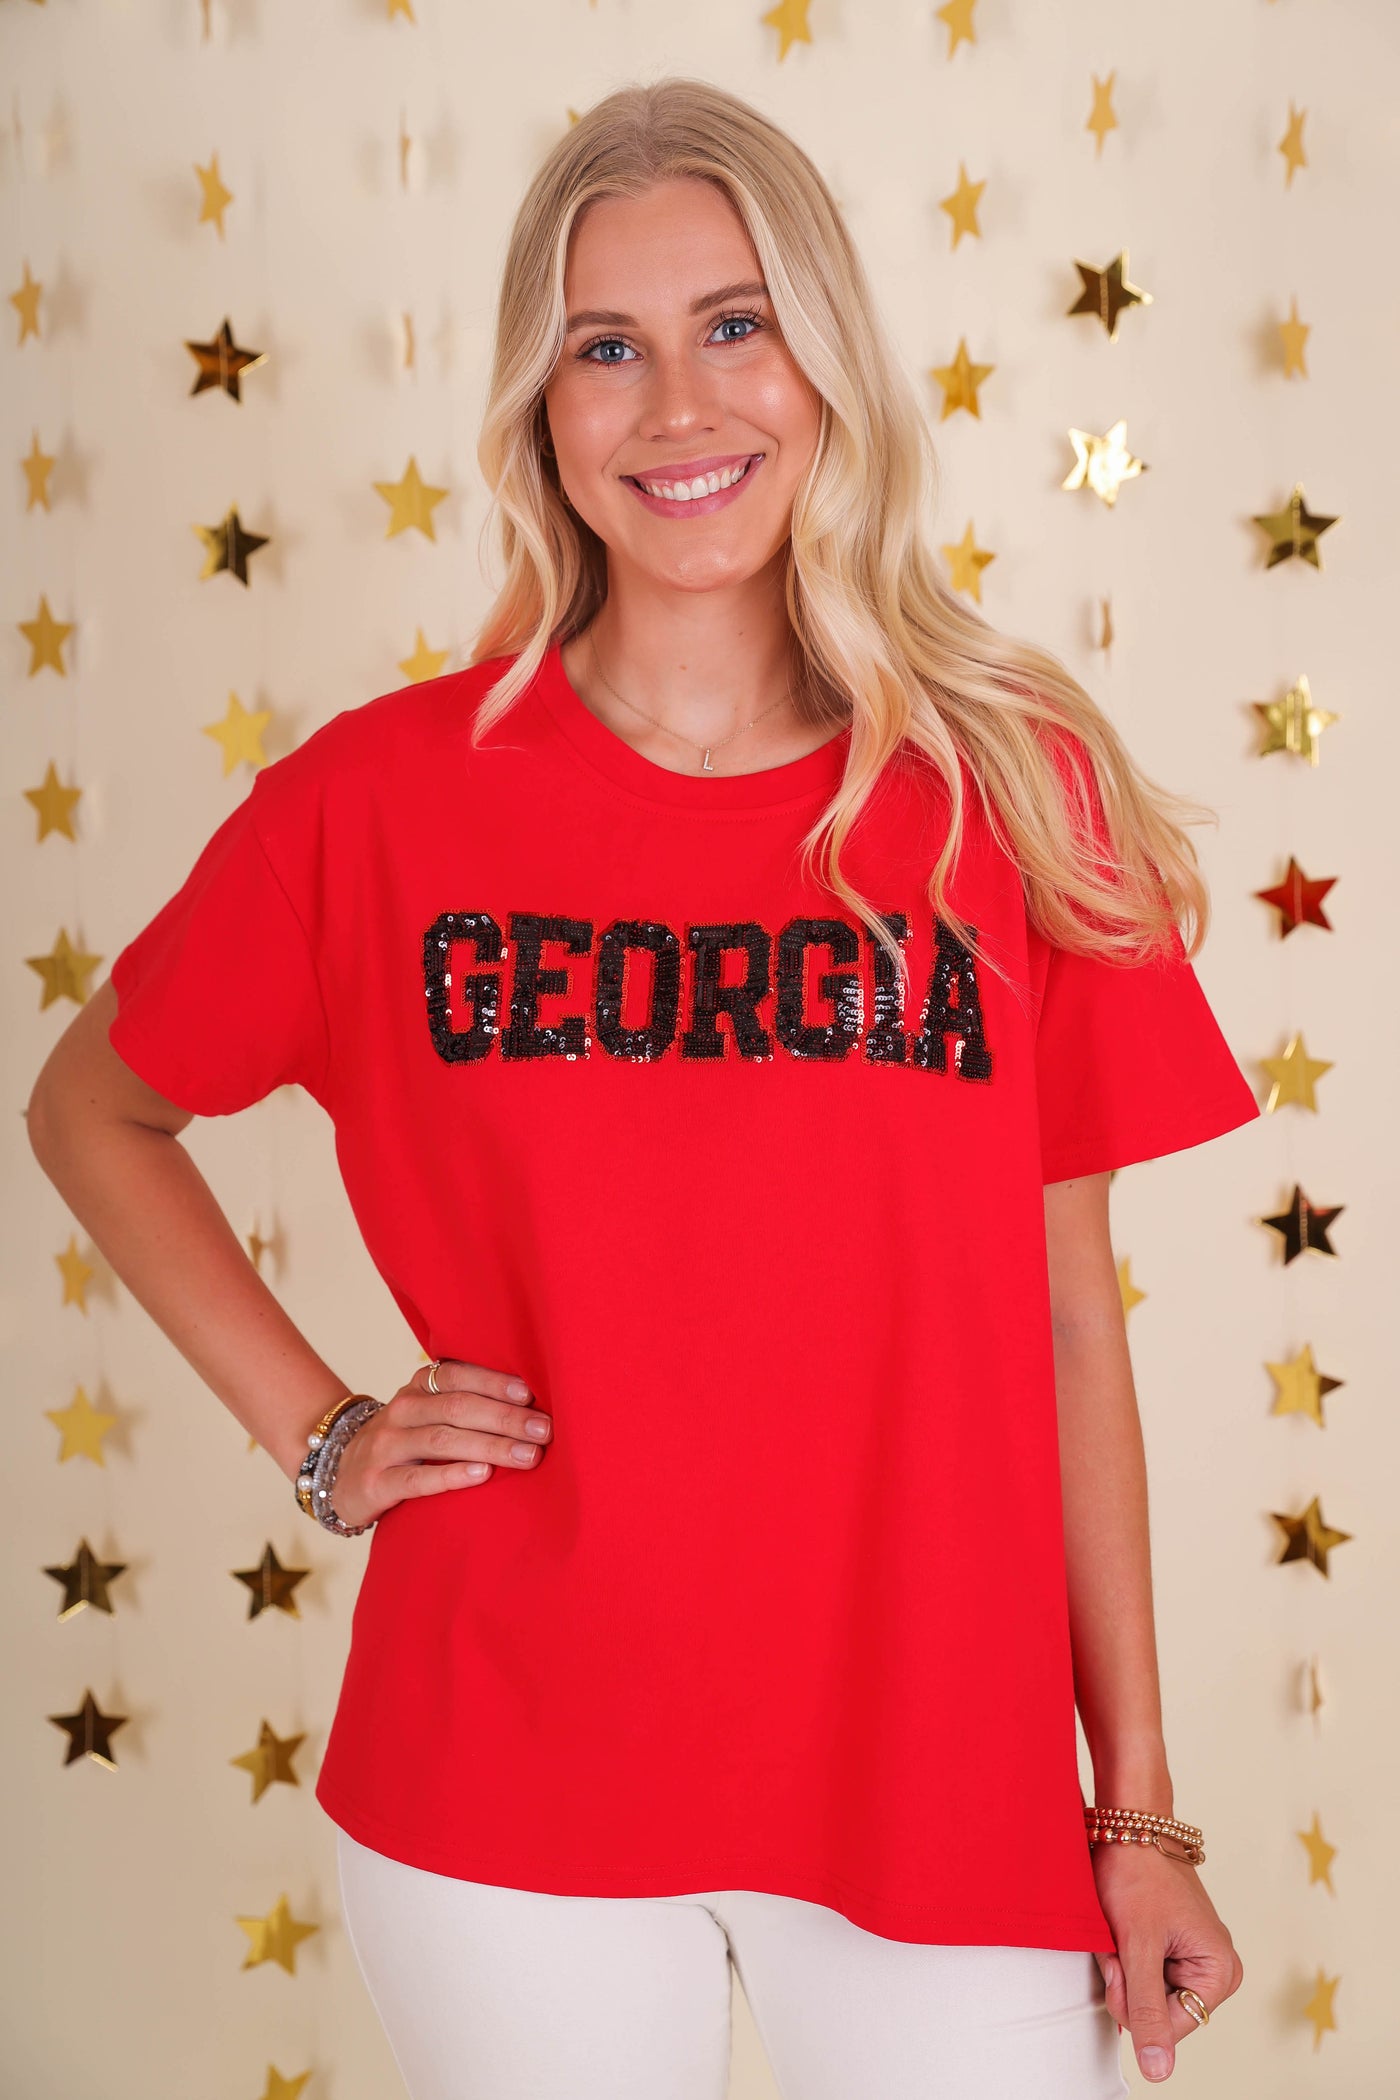 Women's Red Georgia Shirt- Sequin UGA Tee- Women's Cute UGA Top